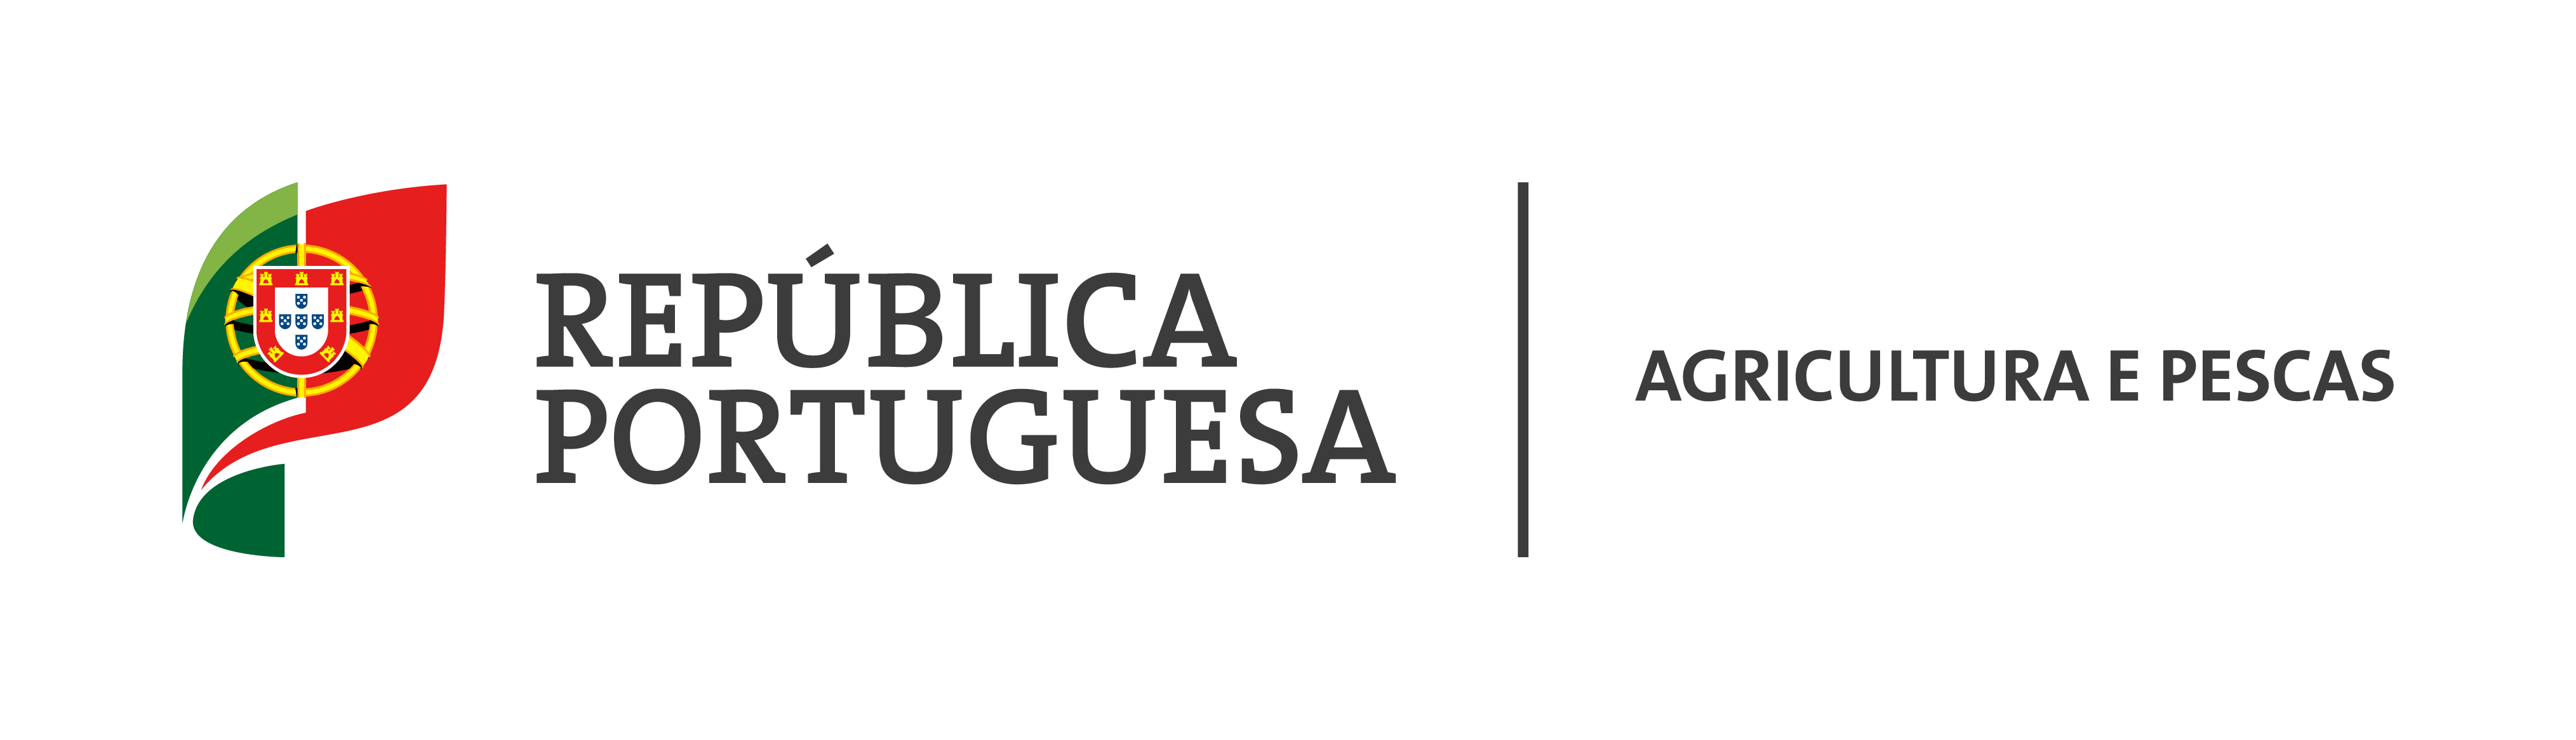 logotipo República Portguesa - Agricultura e Pescas